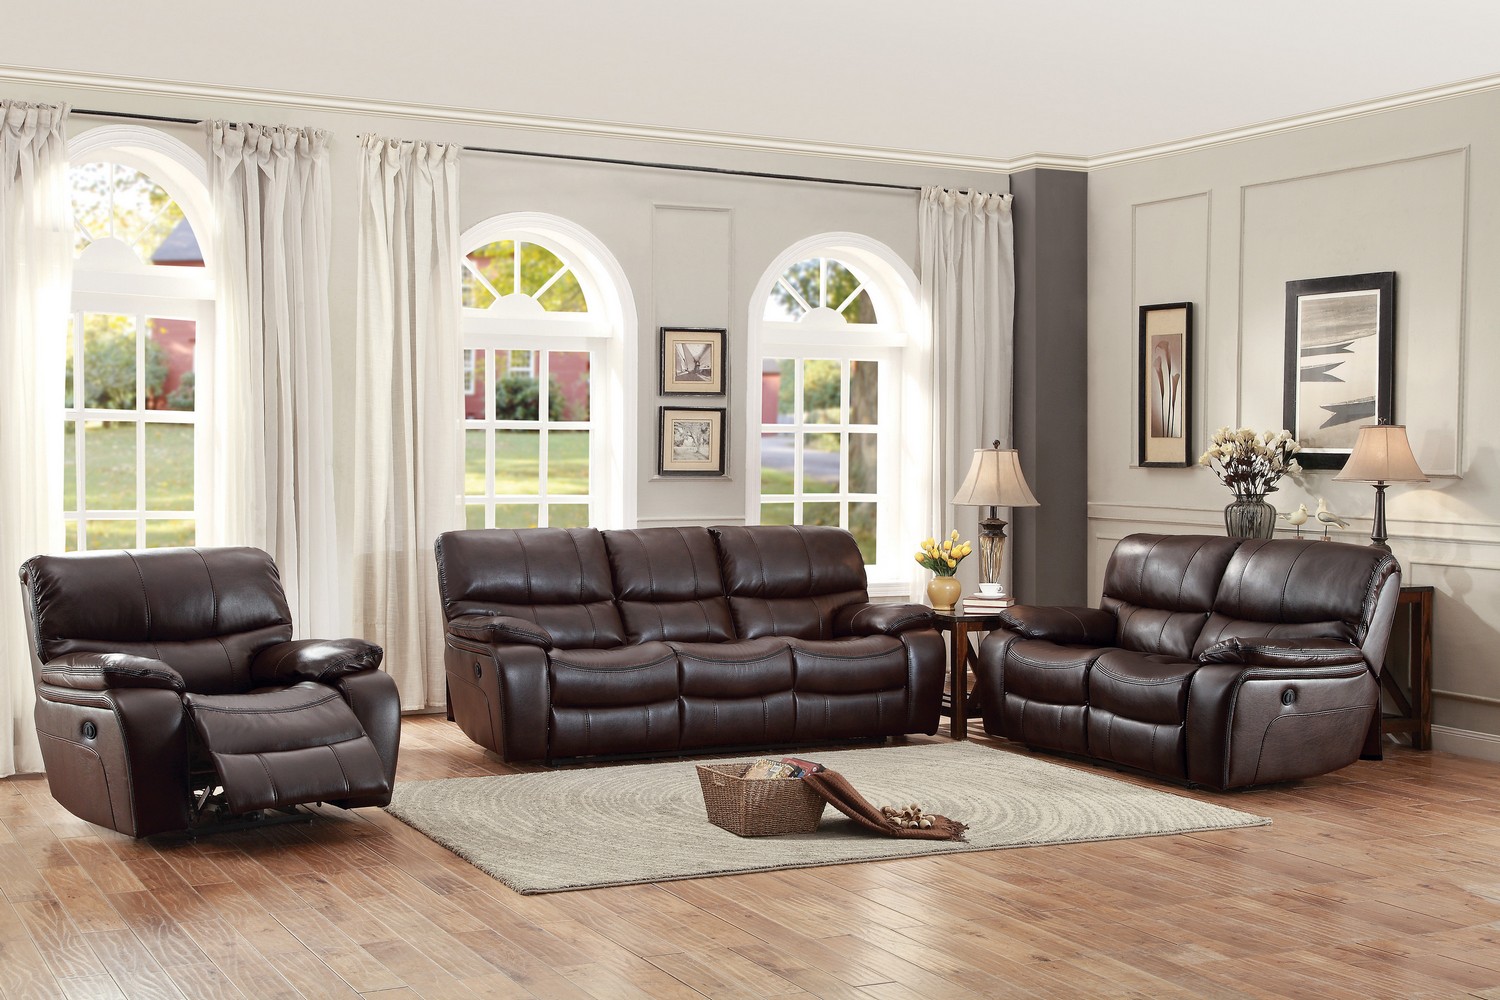 Homelegance Pecos Power Reclining Sofa Set - Leather Gel Match - Dark Brown